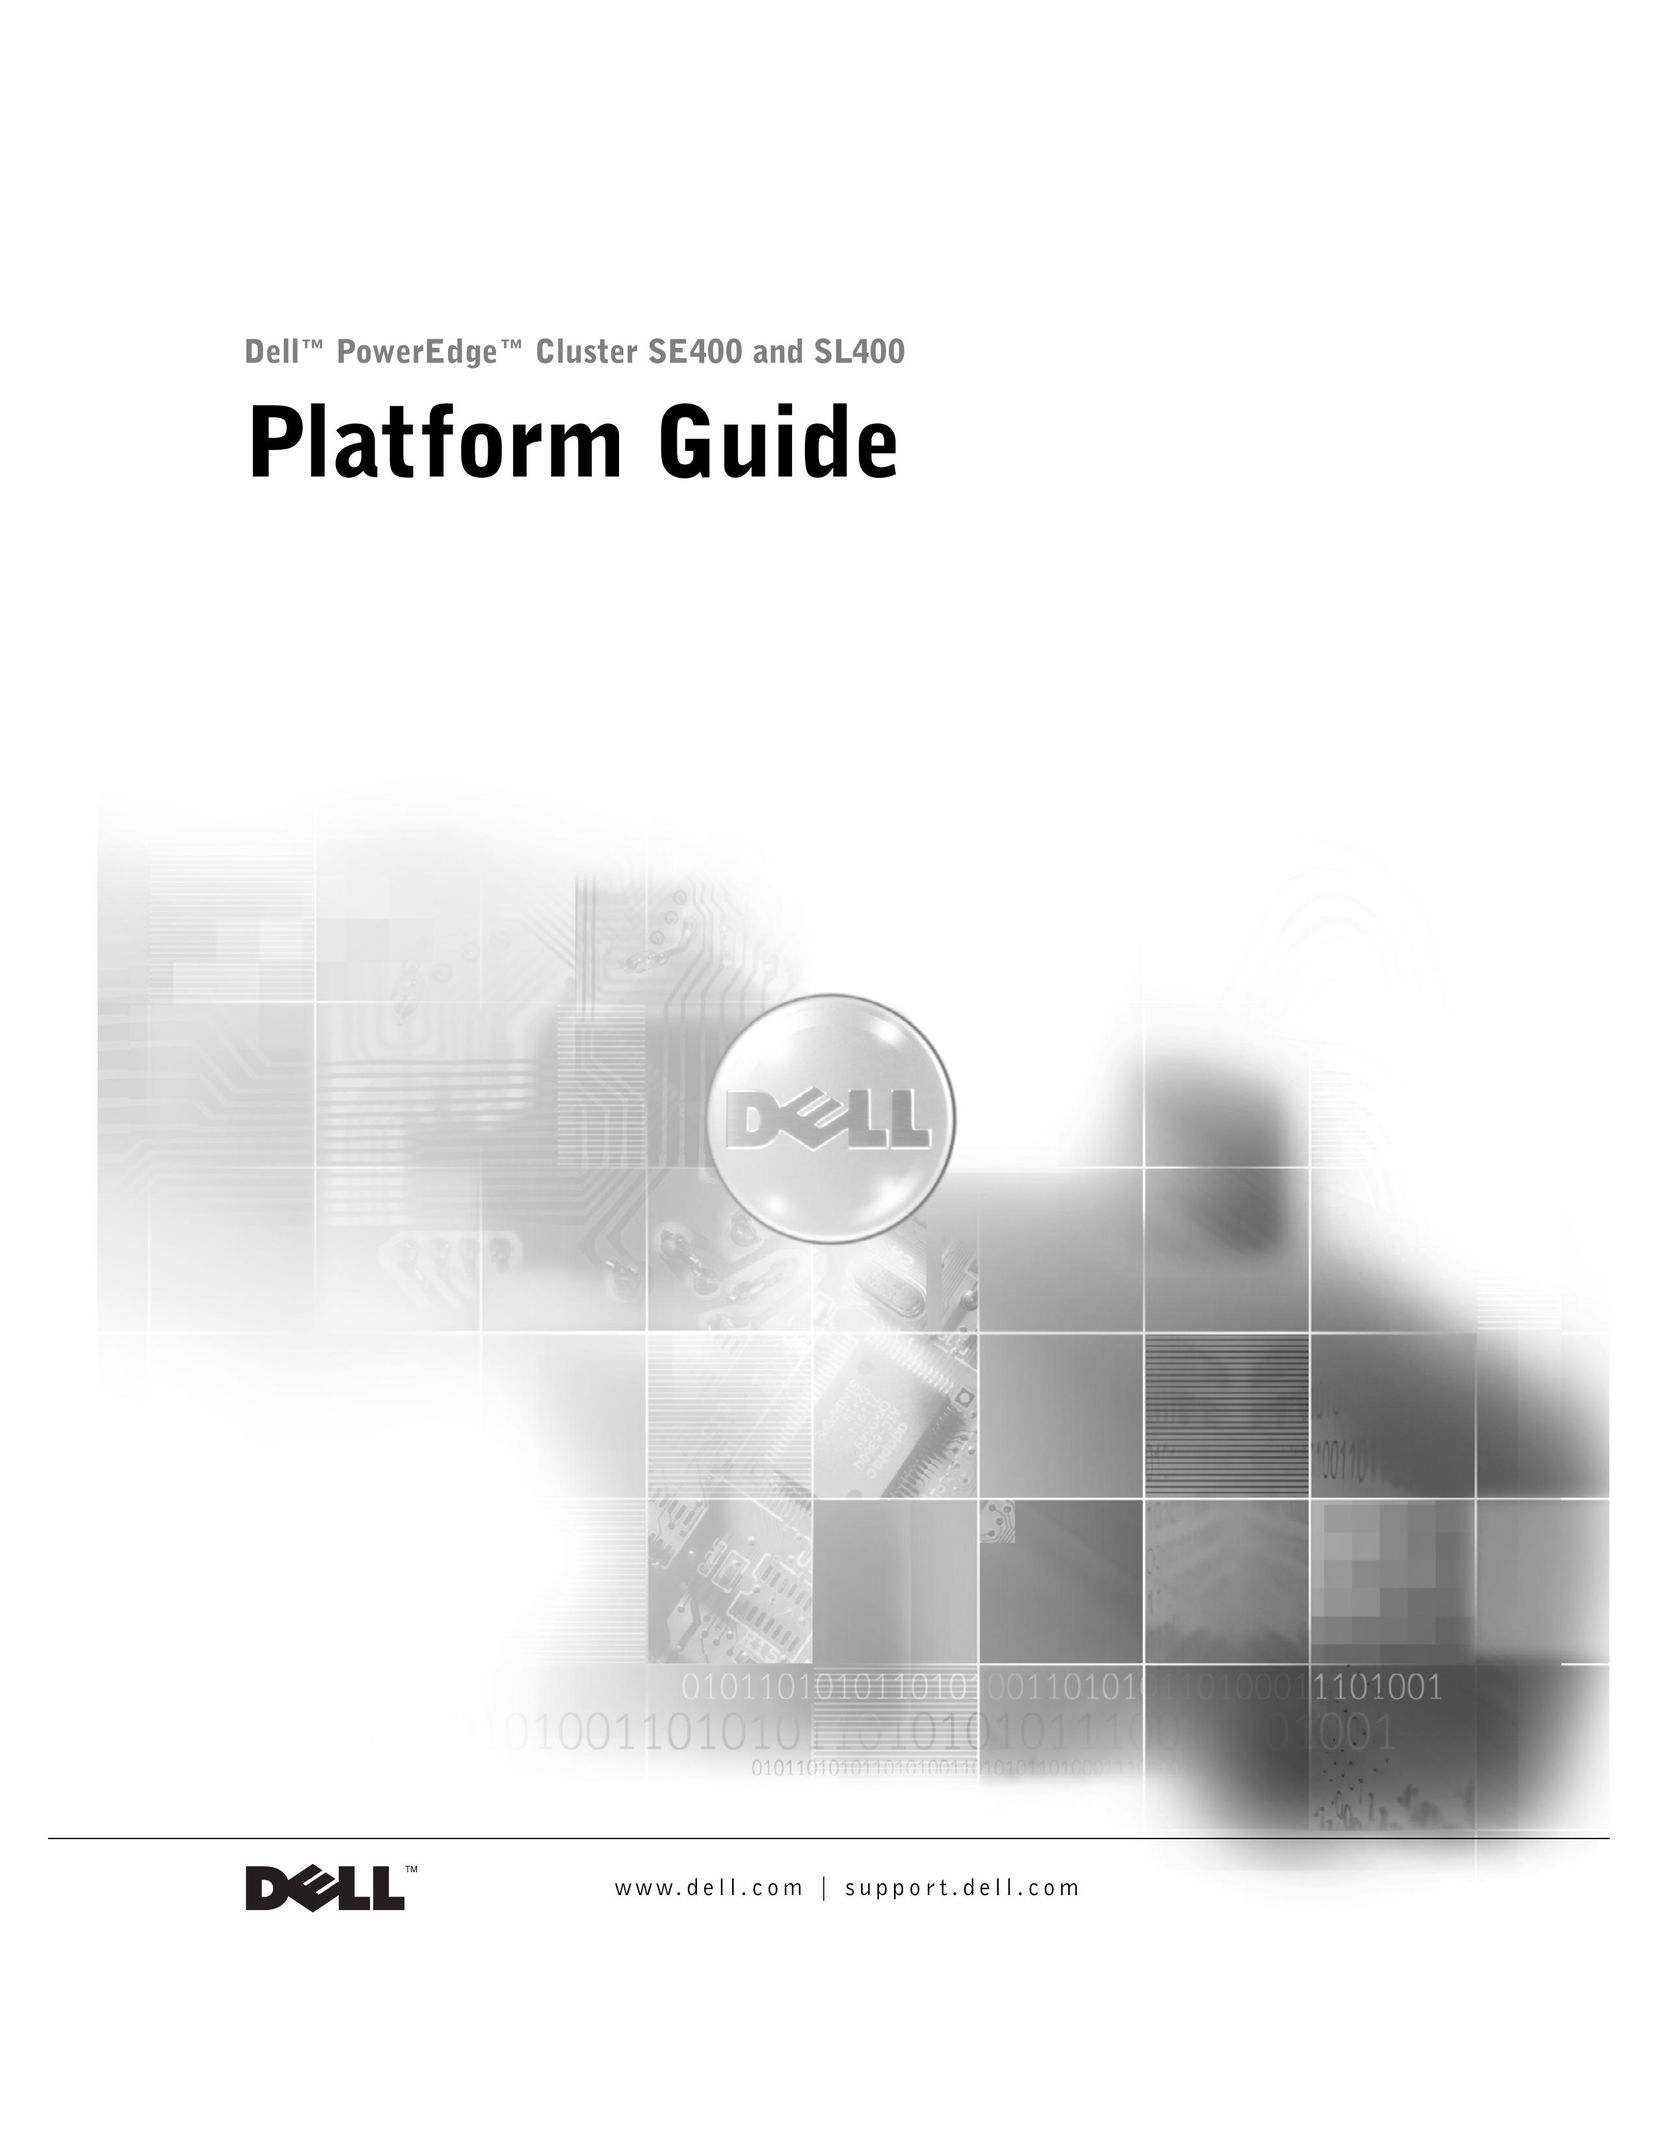 Dell SE400 Network Hardware User Manual